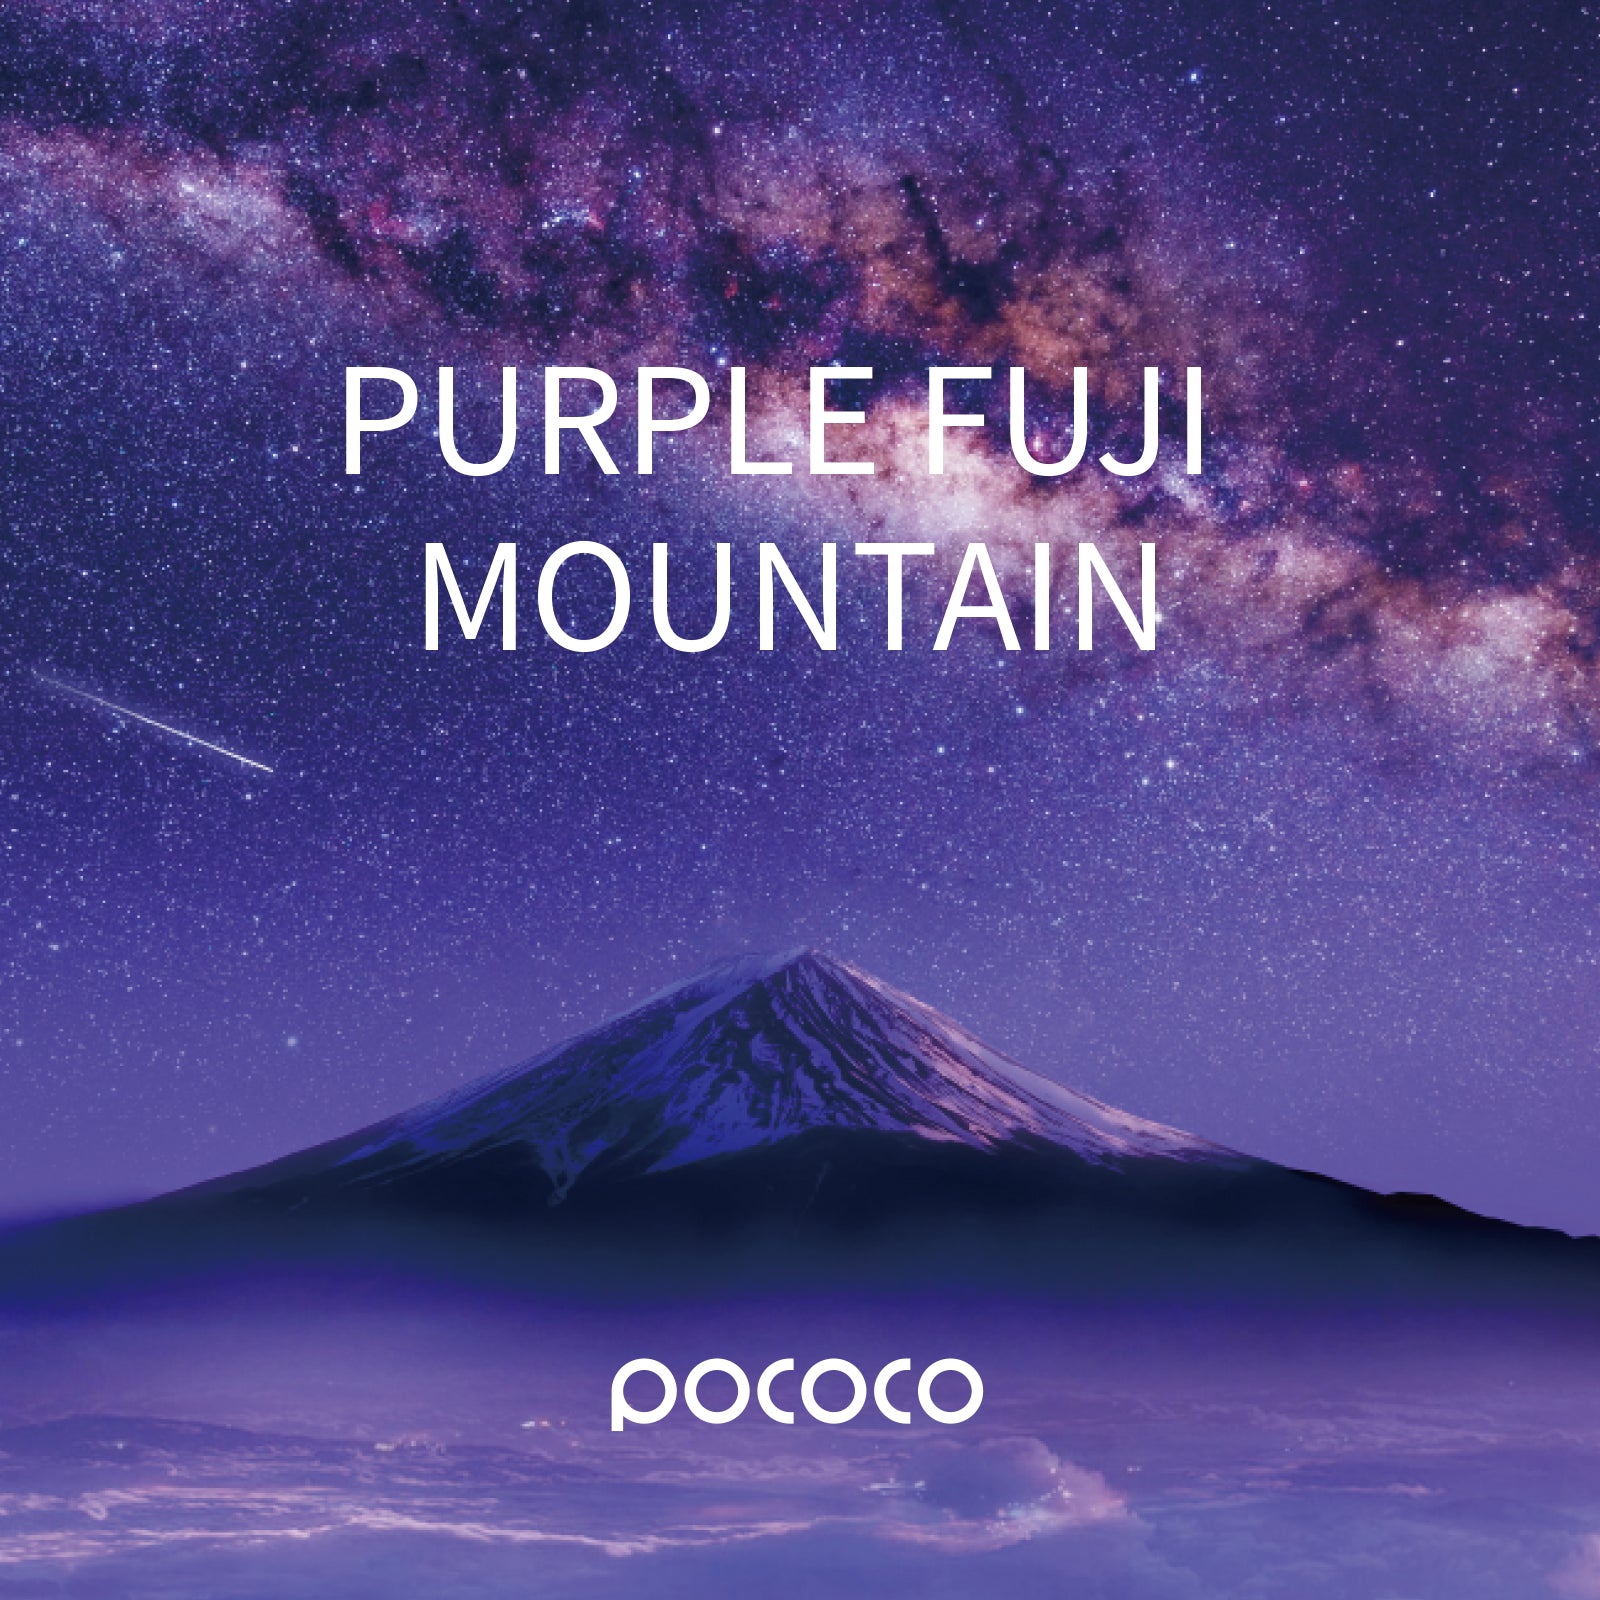 POCOCO Galaxy Projector Disc - Purple Fuji Mountain